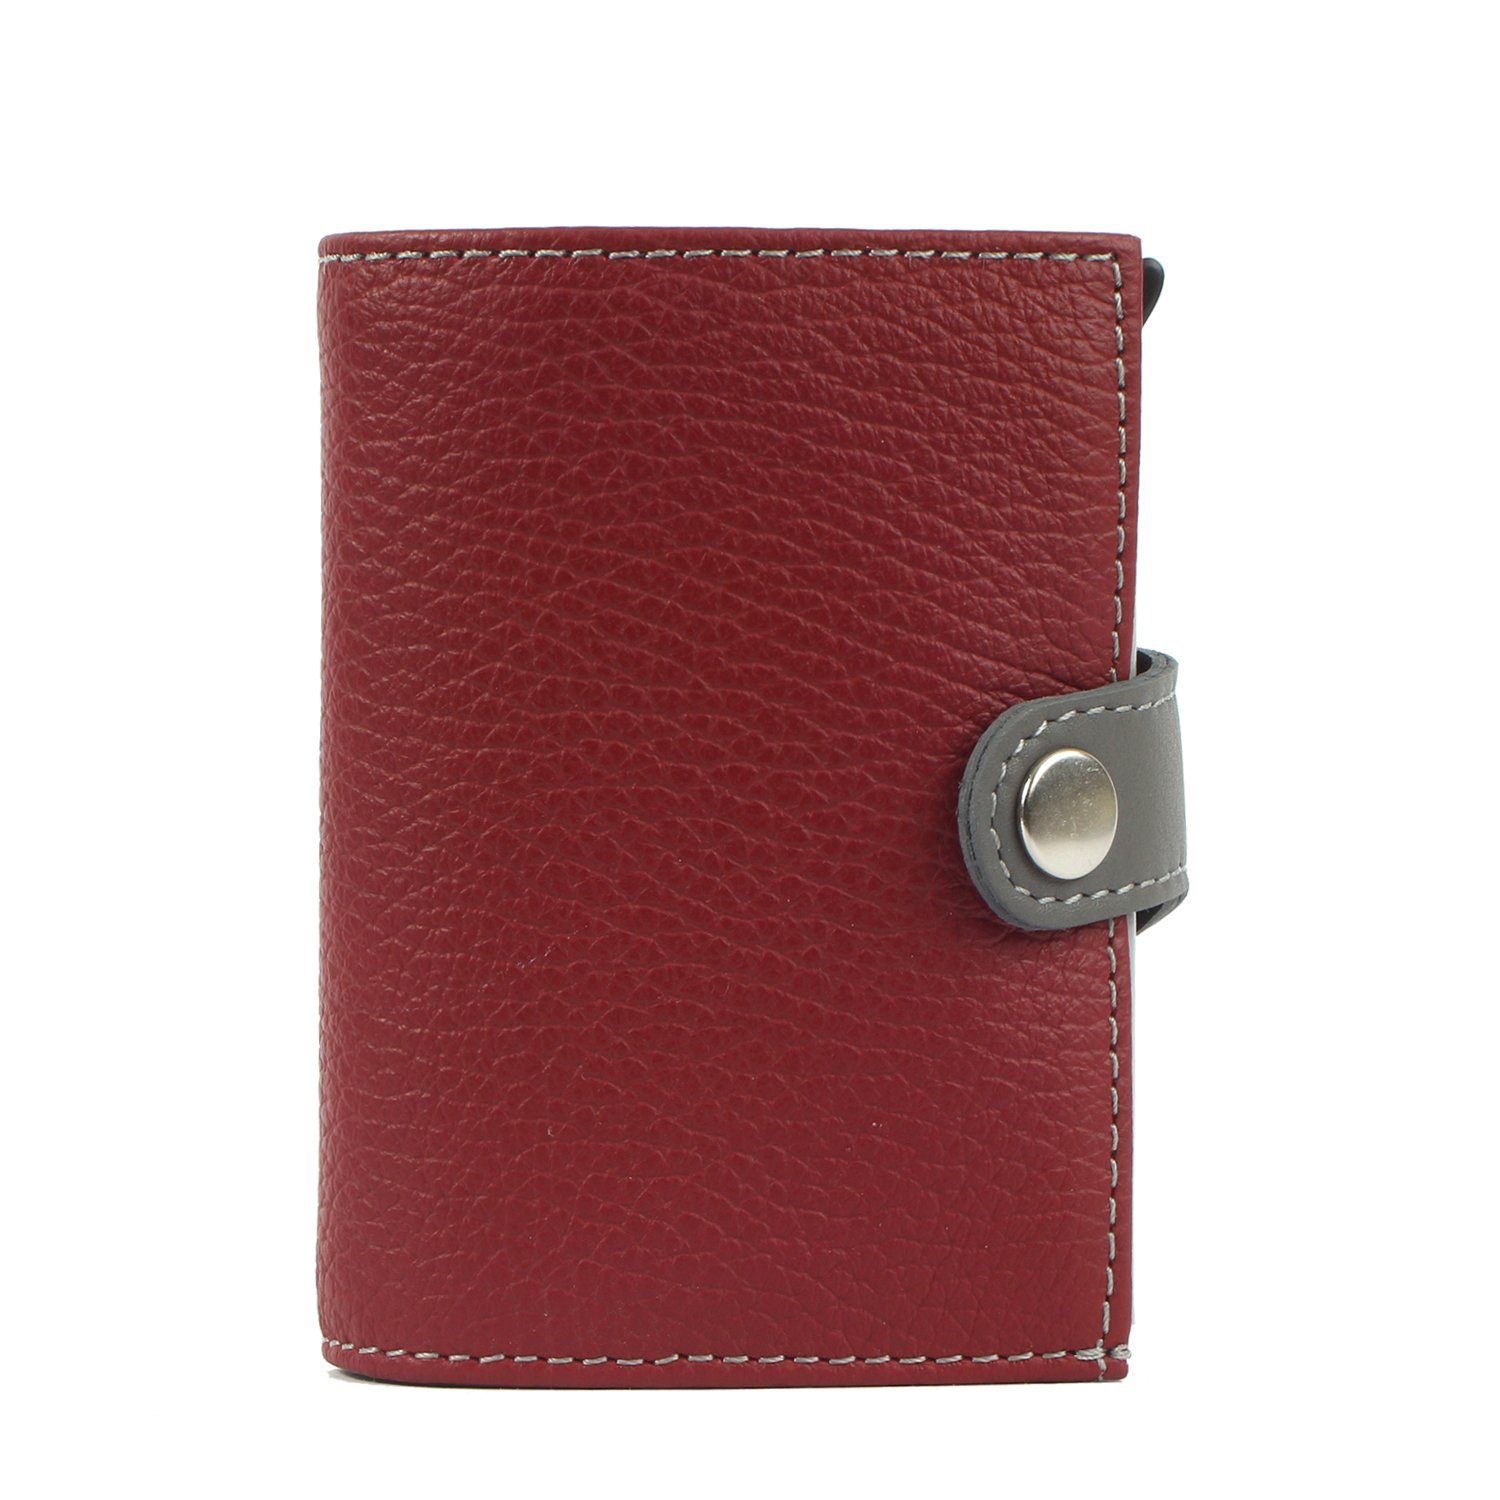 Margelisch Mini Geldbörse noonyu double leather, RFID Kreditkartenbörse aus Upcycling Leder karminrot